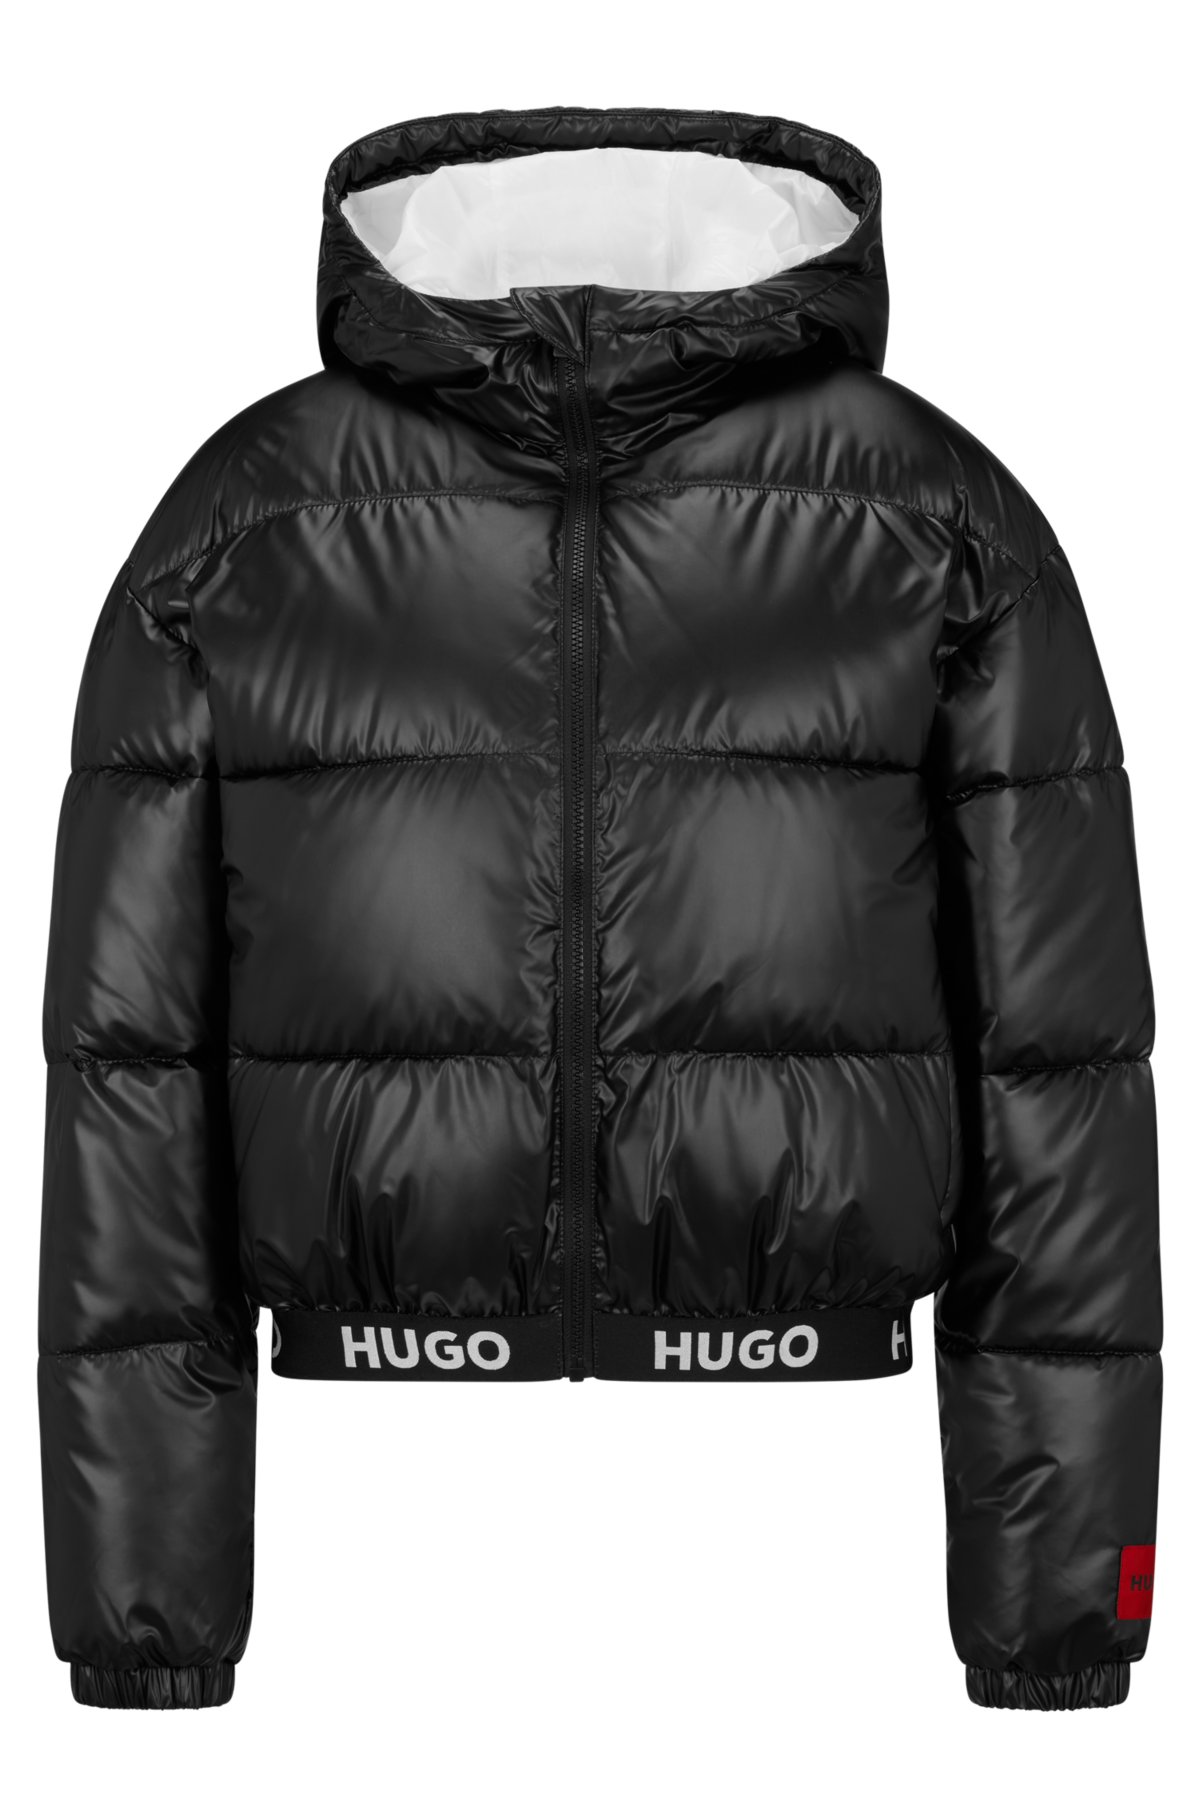 HUGO - Hooded regular-fit waistband jacket with logo